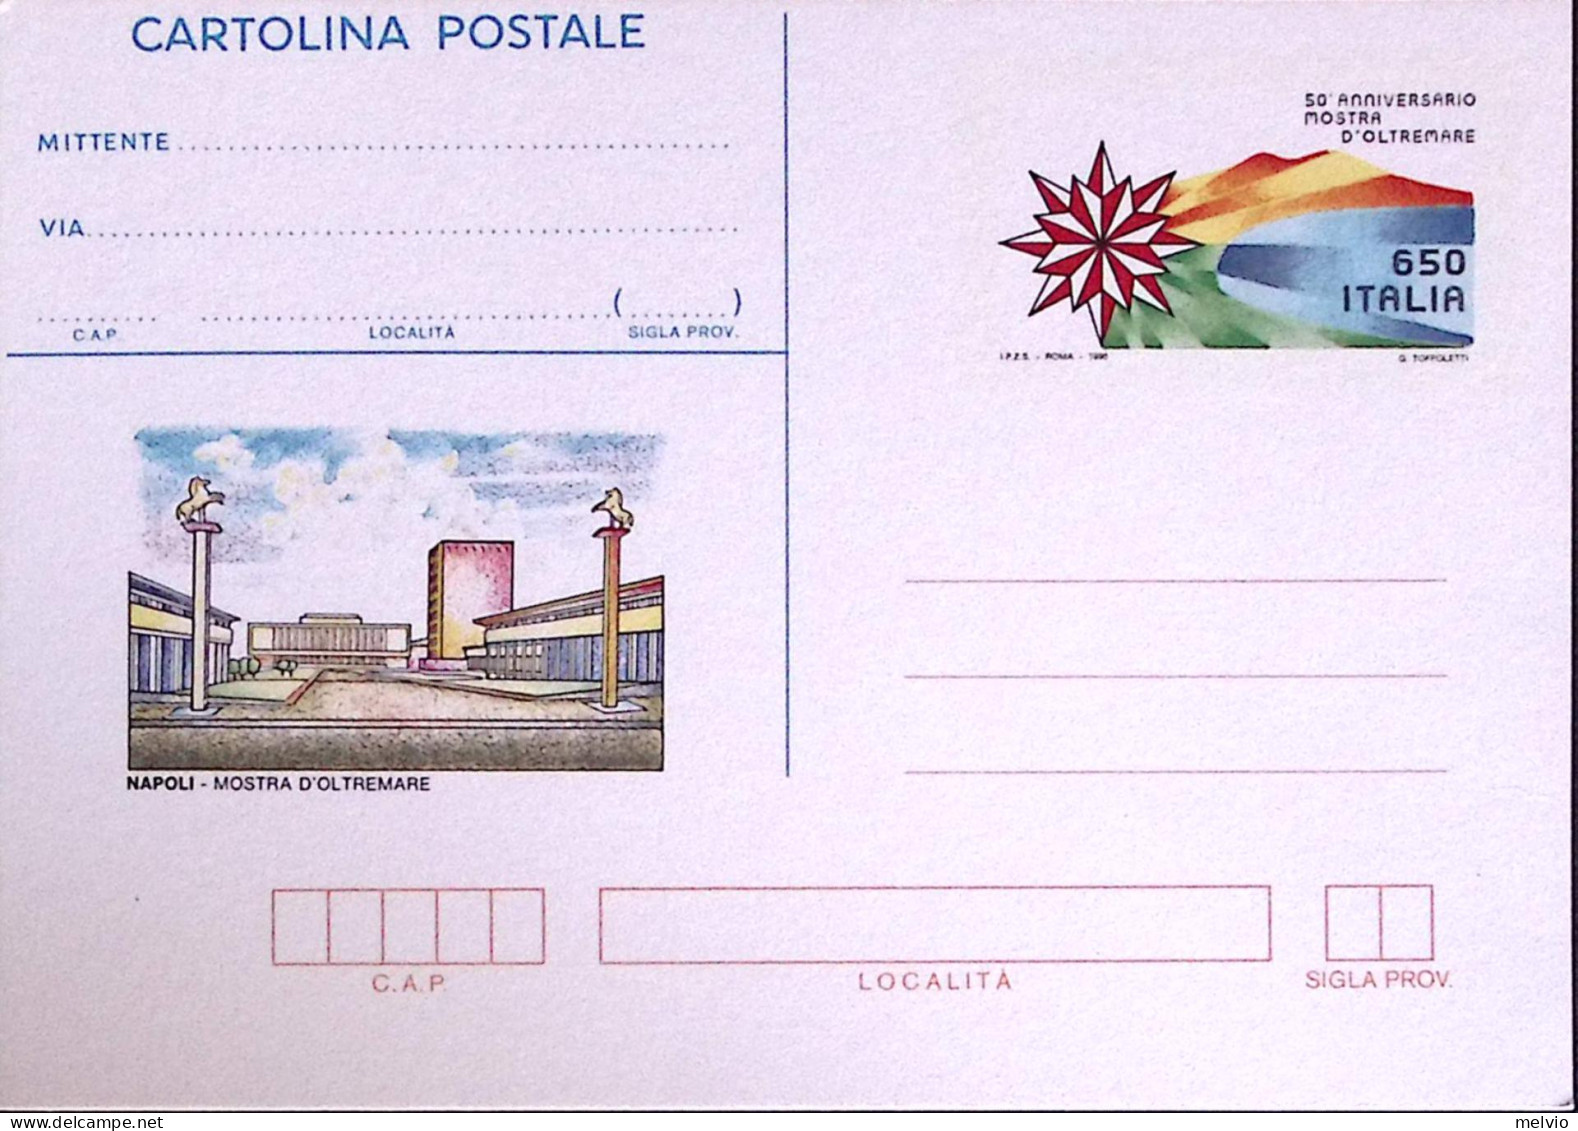 1990-Cartolina Postale Lire 650 Mostra D'oltremare Nuova - Entiers Postaux